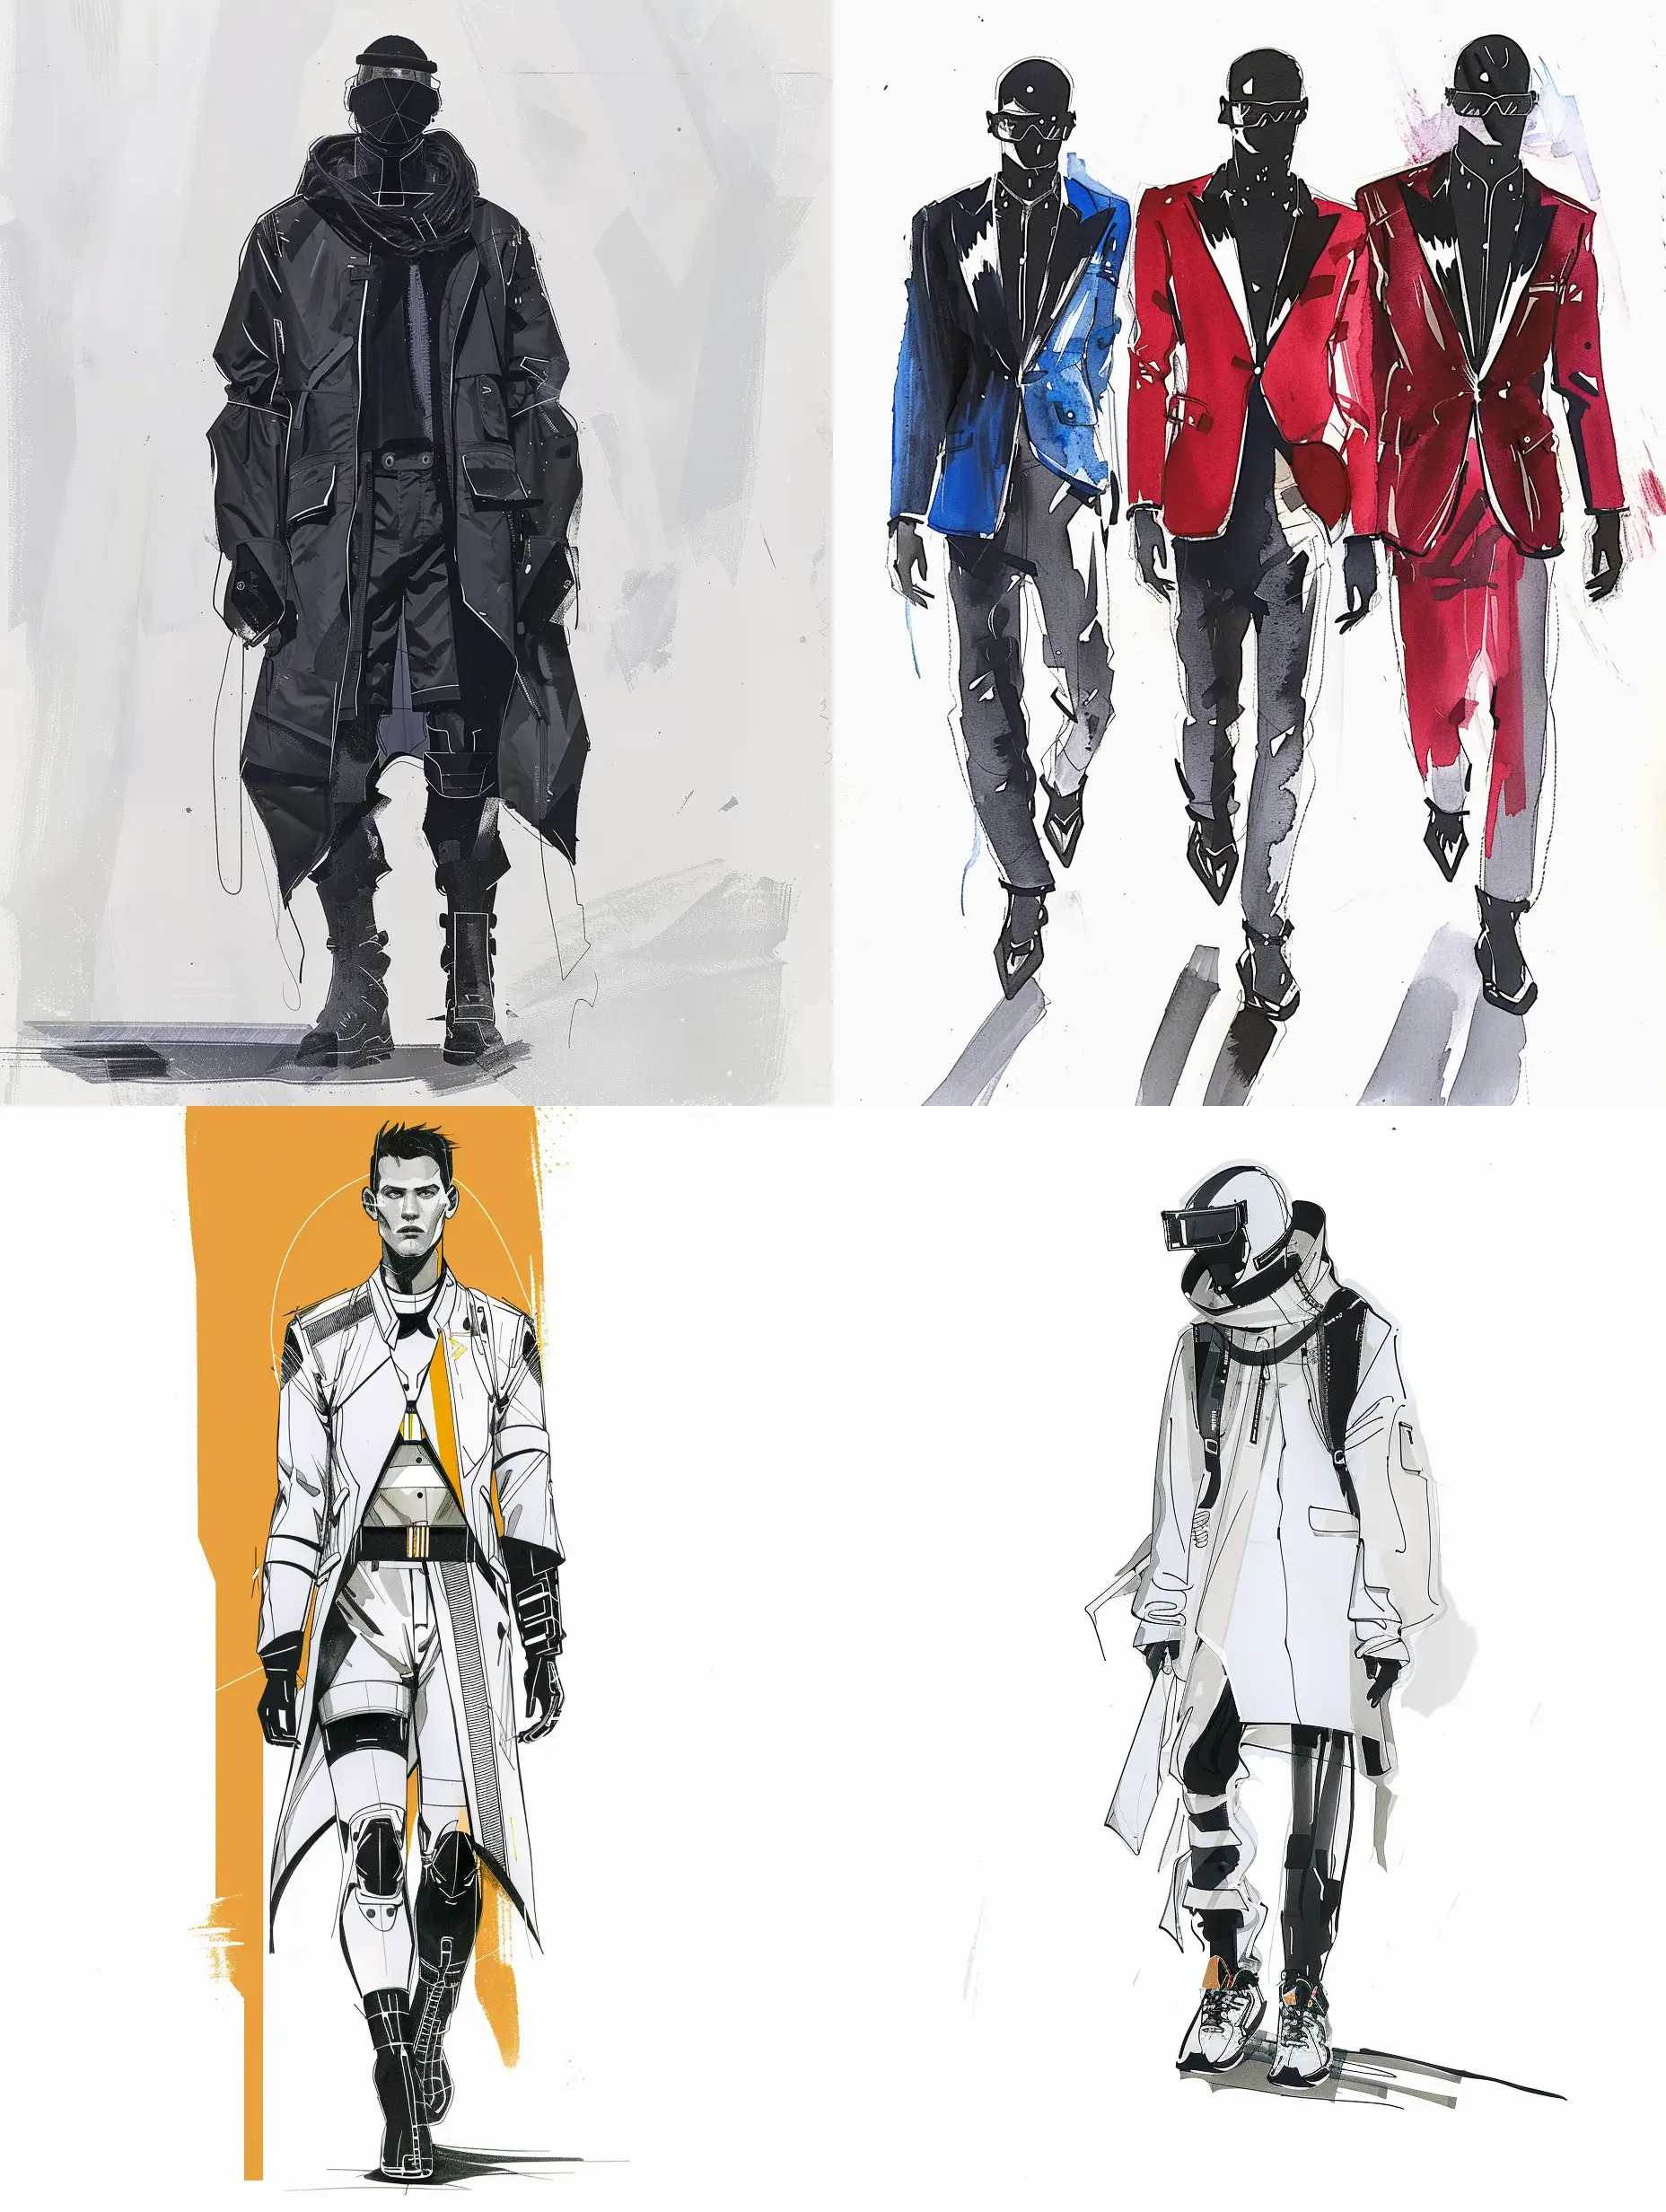 futuristic male high fashion, inspired by 3 Body Problem, runway sketches minimalist illustration
